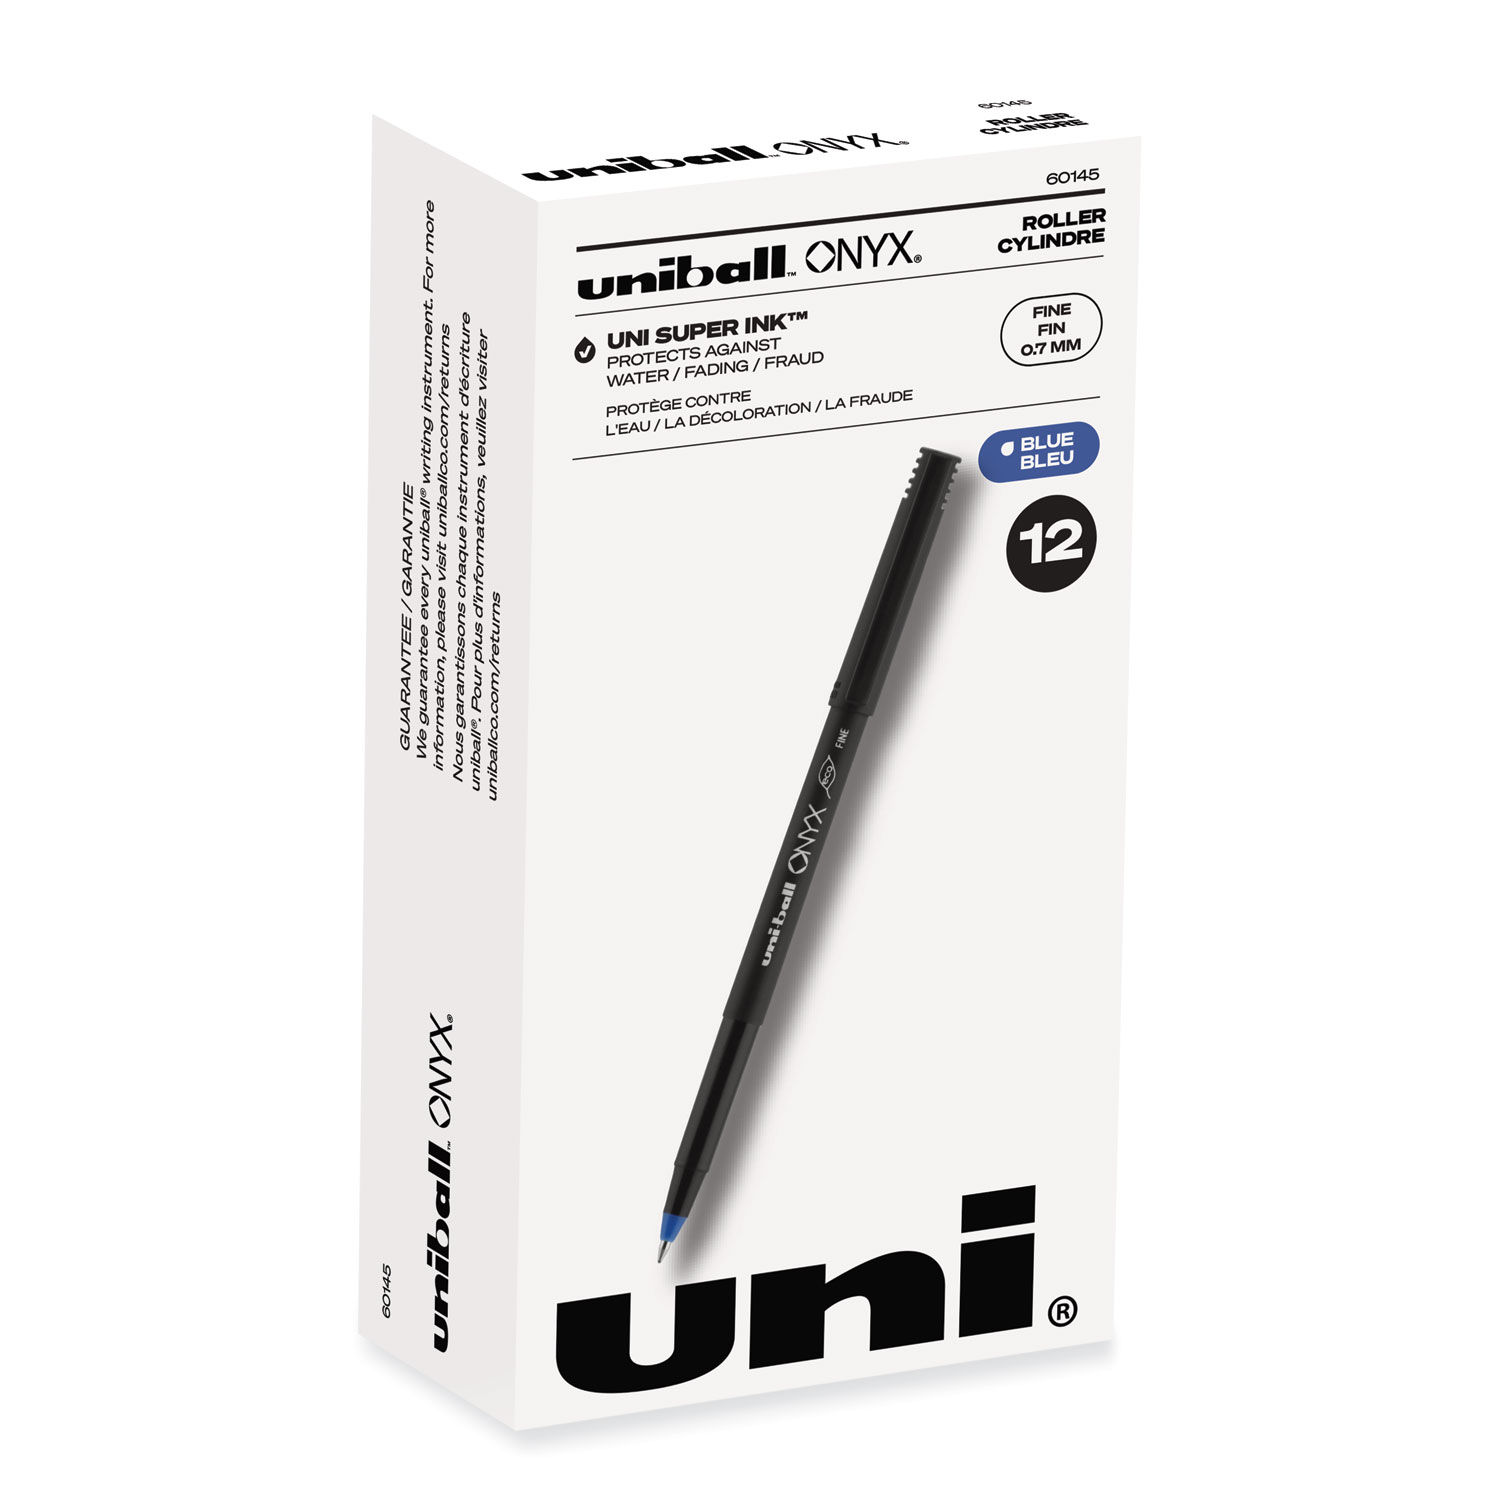 ONYX Roller Ball Pen by uni-ballandreg; UBC60145